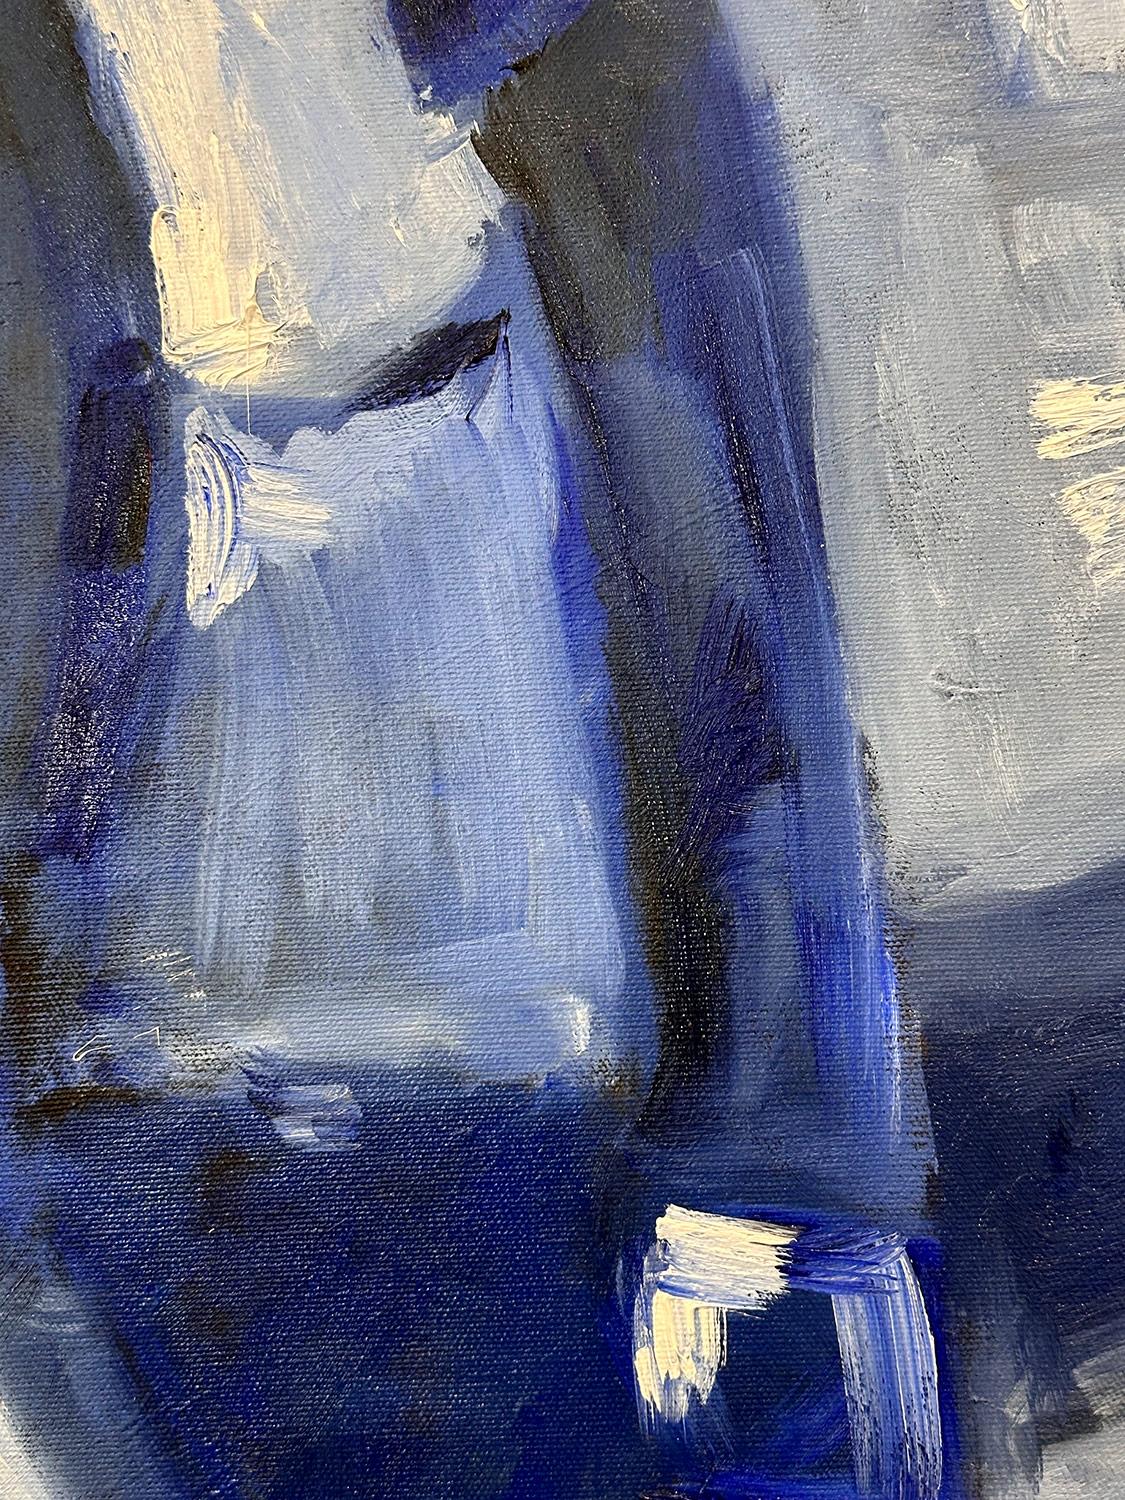 „Blaue Frau am Fenster“ Stil der Modigliani-Figur, Ölgemälde auf Leinwand (Moderne), Painting, von Cindy Shaoul